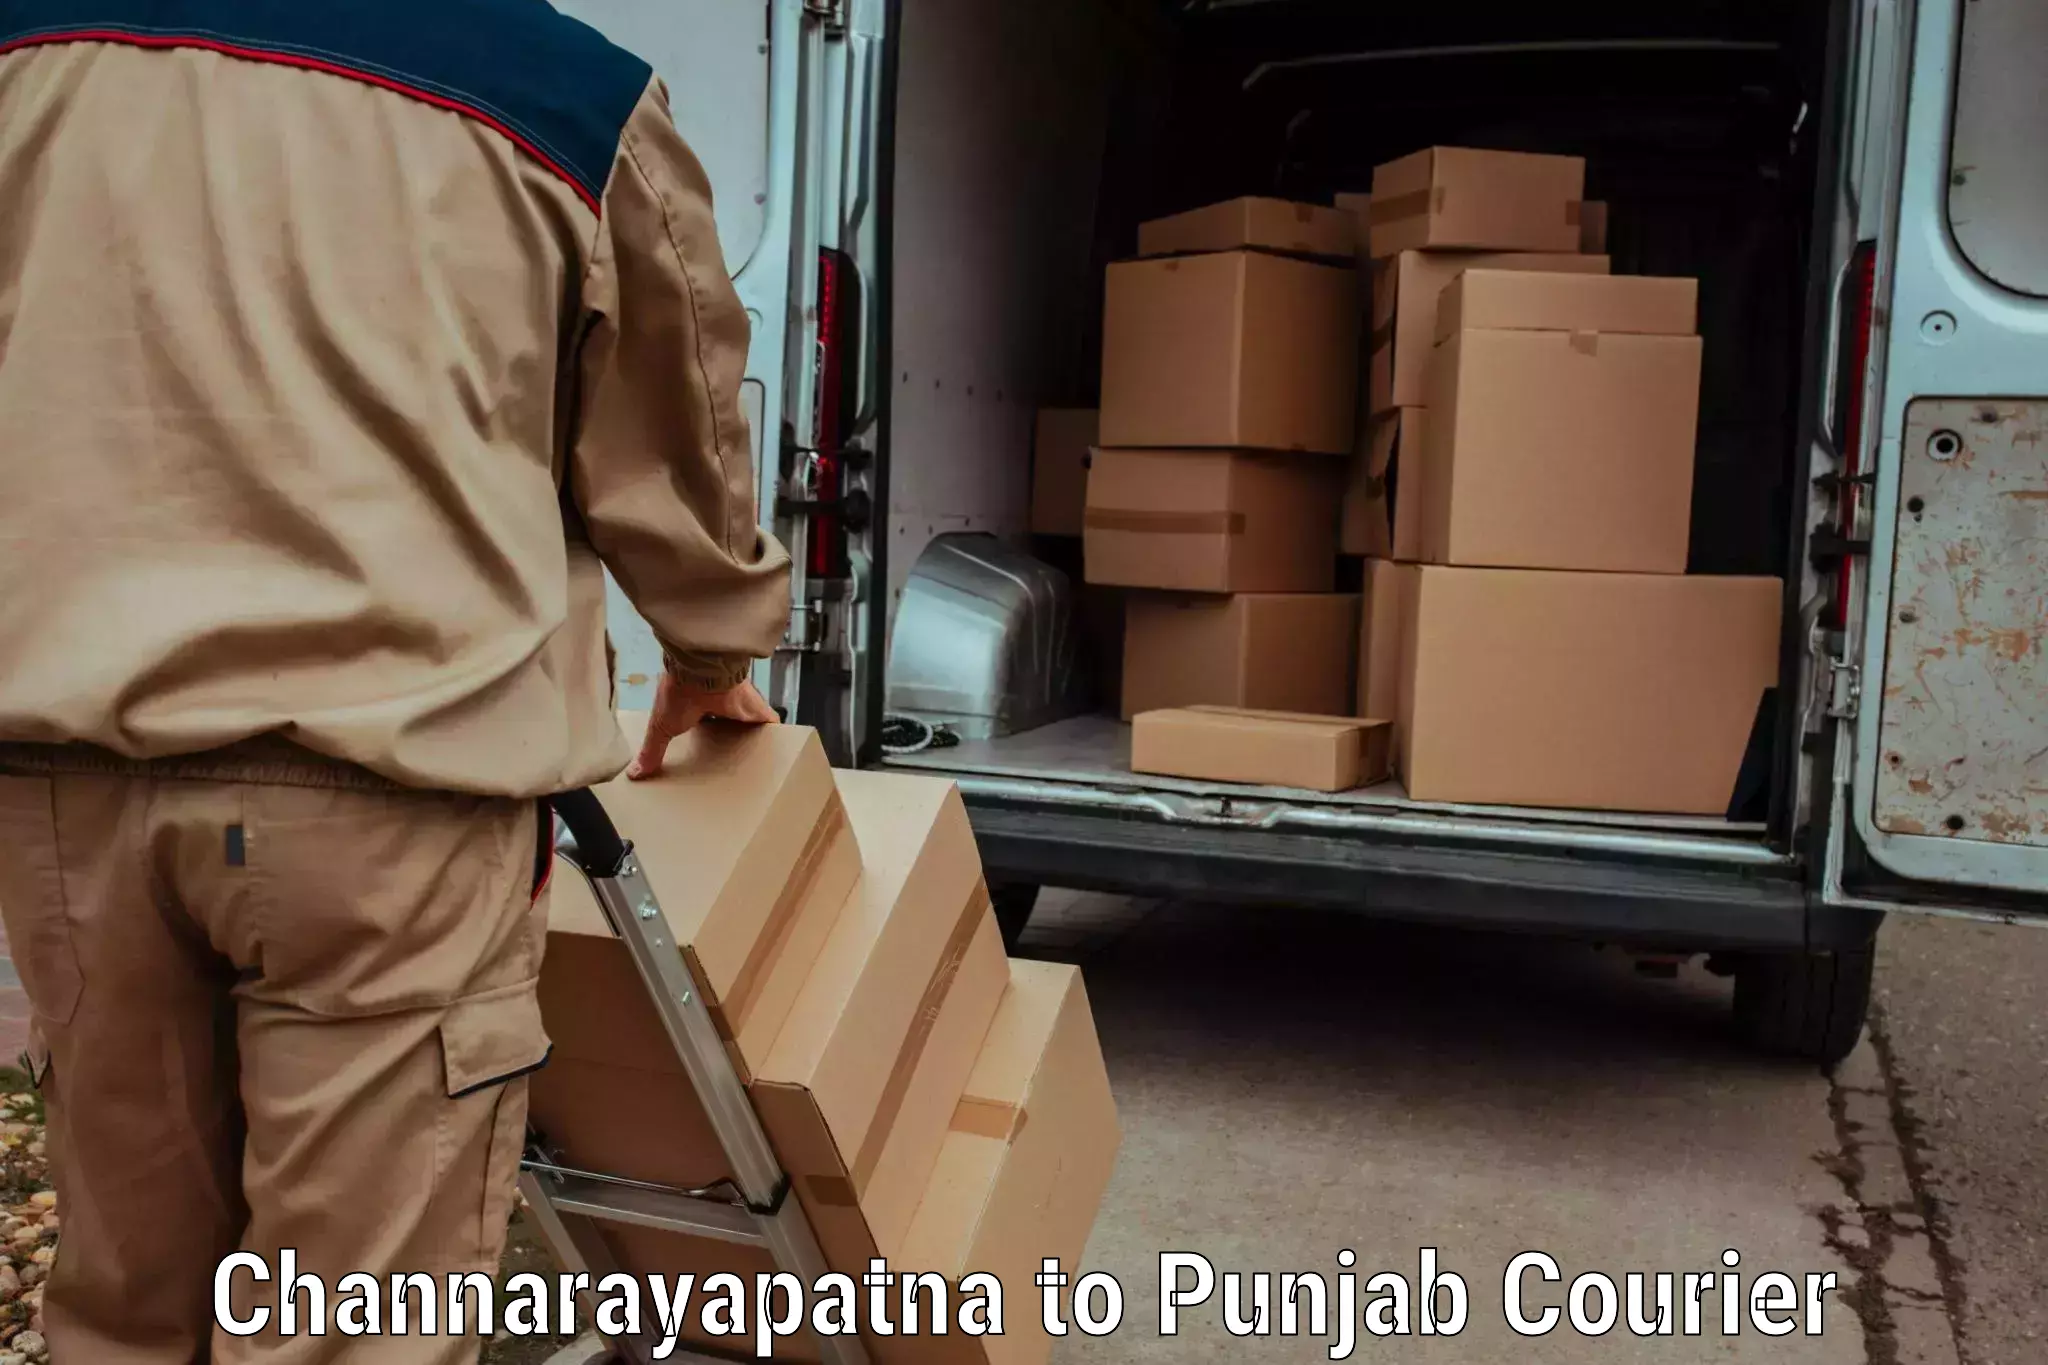 Door-to-door freight service in Channarayapatna to Jalandhar